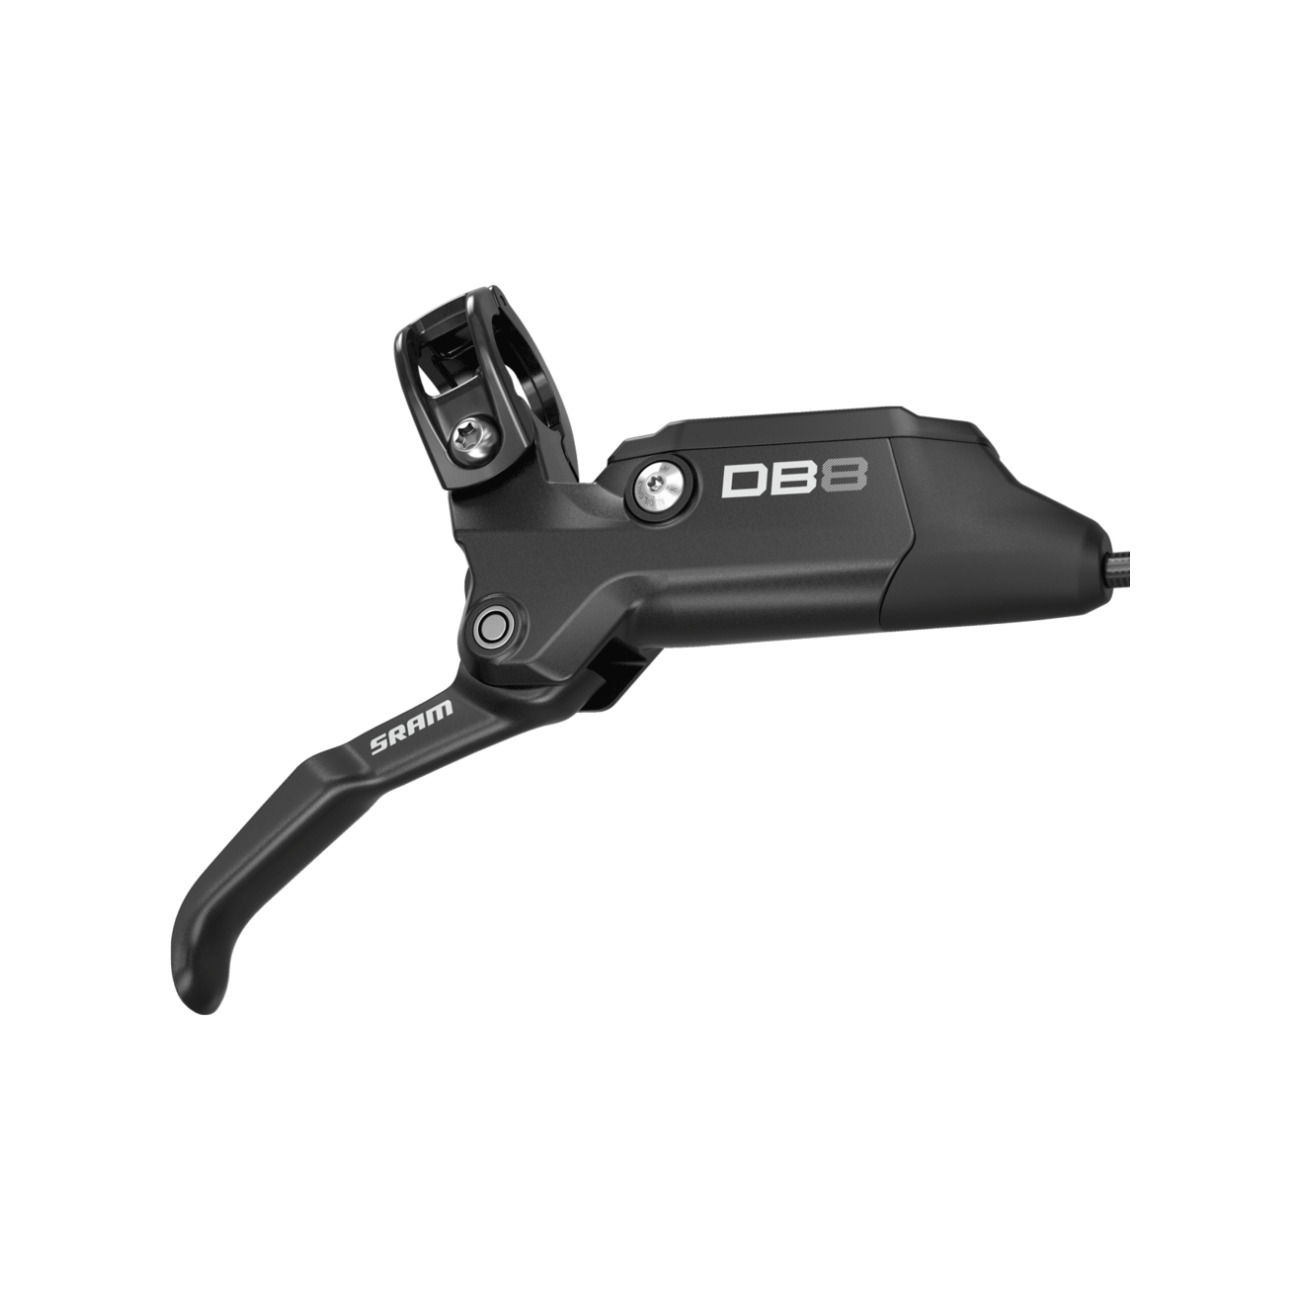 
                SRAM kotúčová brzda - DB8 950mm - čierna
            